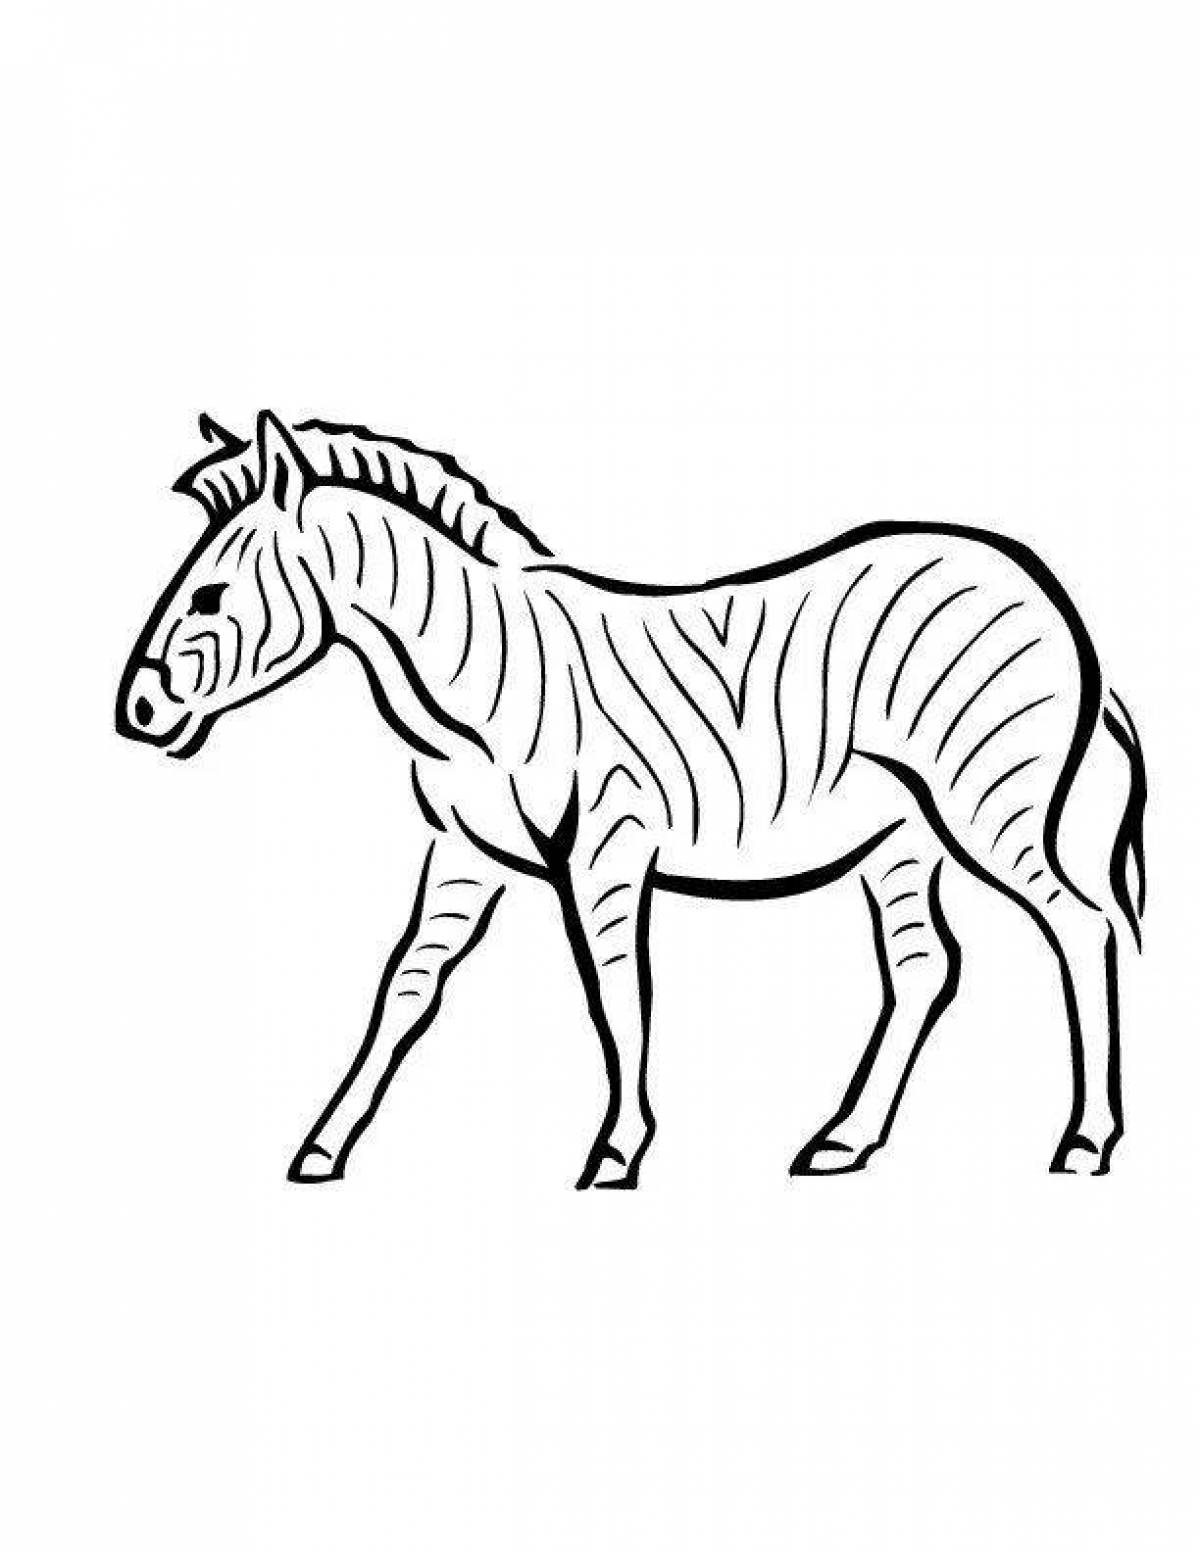 Gorgeous zebra without stripes for kids